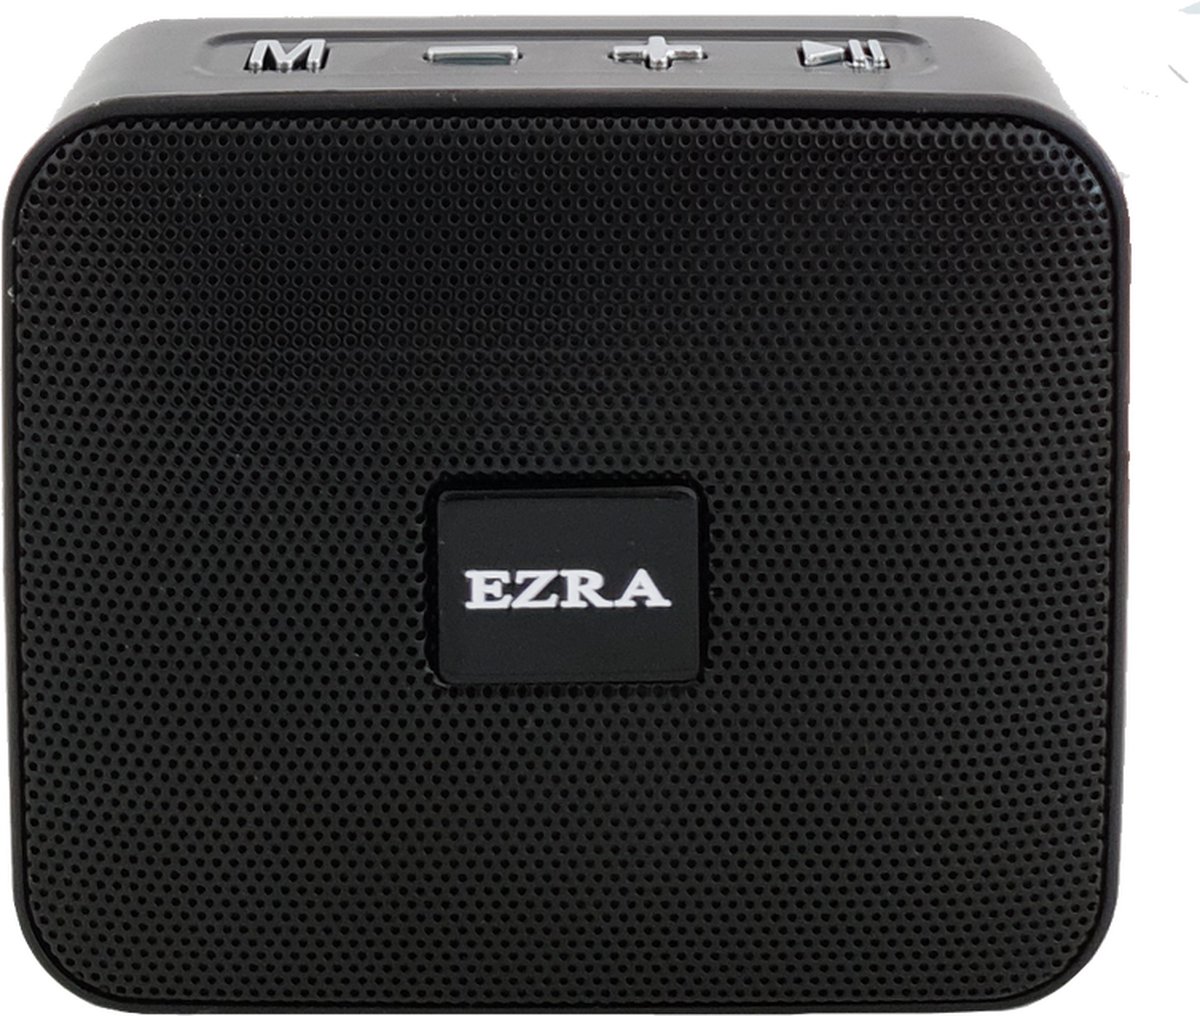 EZRA Portable wireless speaker - zwart - mini speaker - Bluetooth 5.0 - bluetooth speaker - usb aansluiting